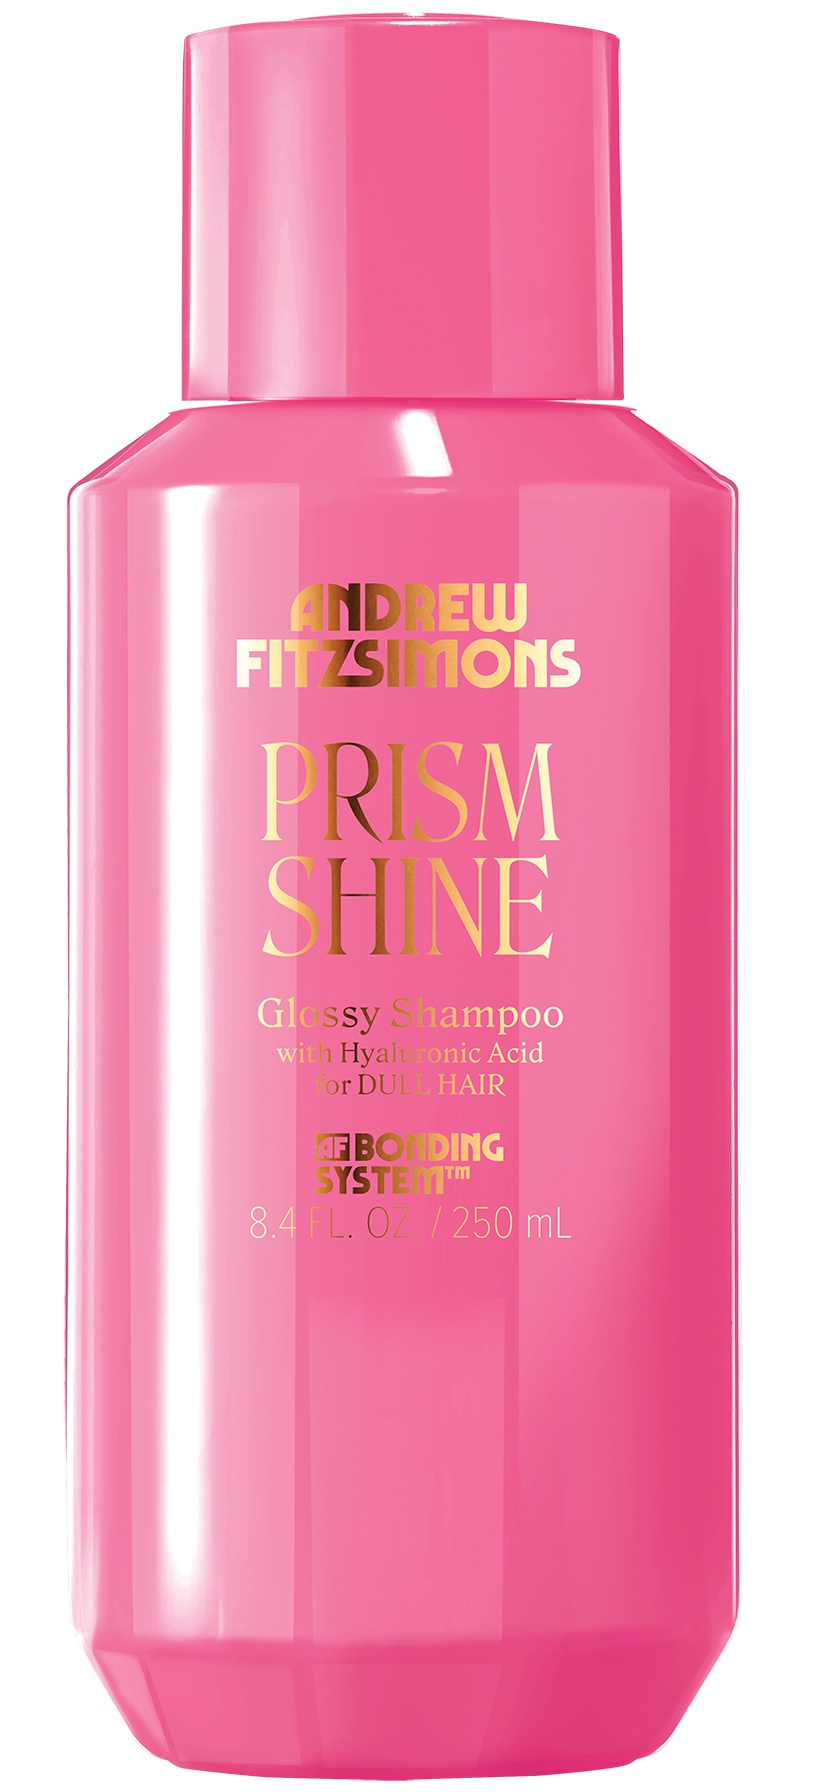 Andrew Fitzsimons Prism Shine Glossy Shampoo